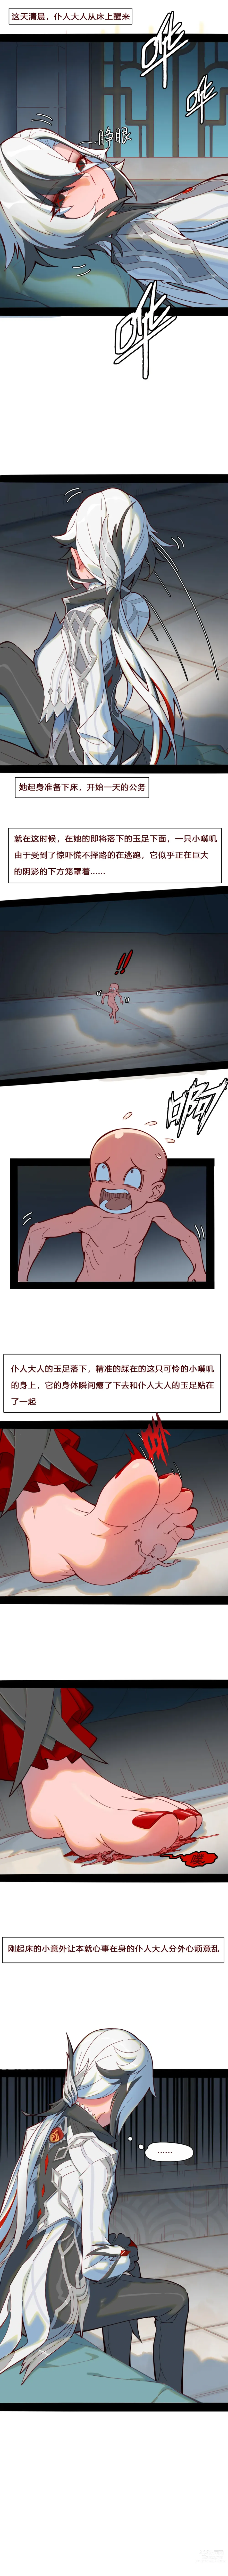 Page 5 of doujinshi Arlecchino: Wrong Side of Bed